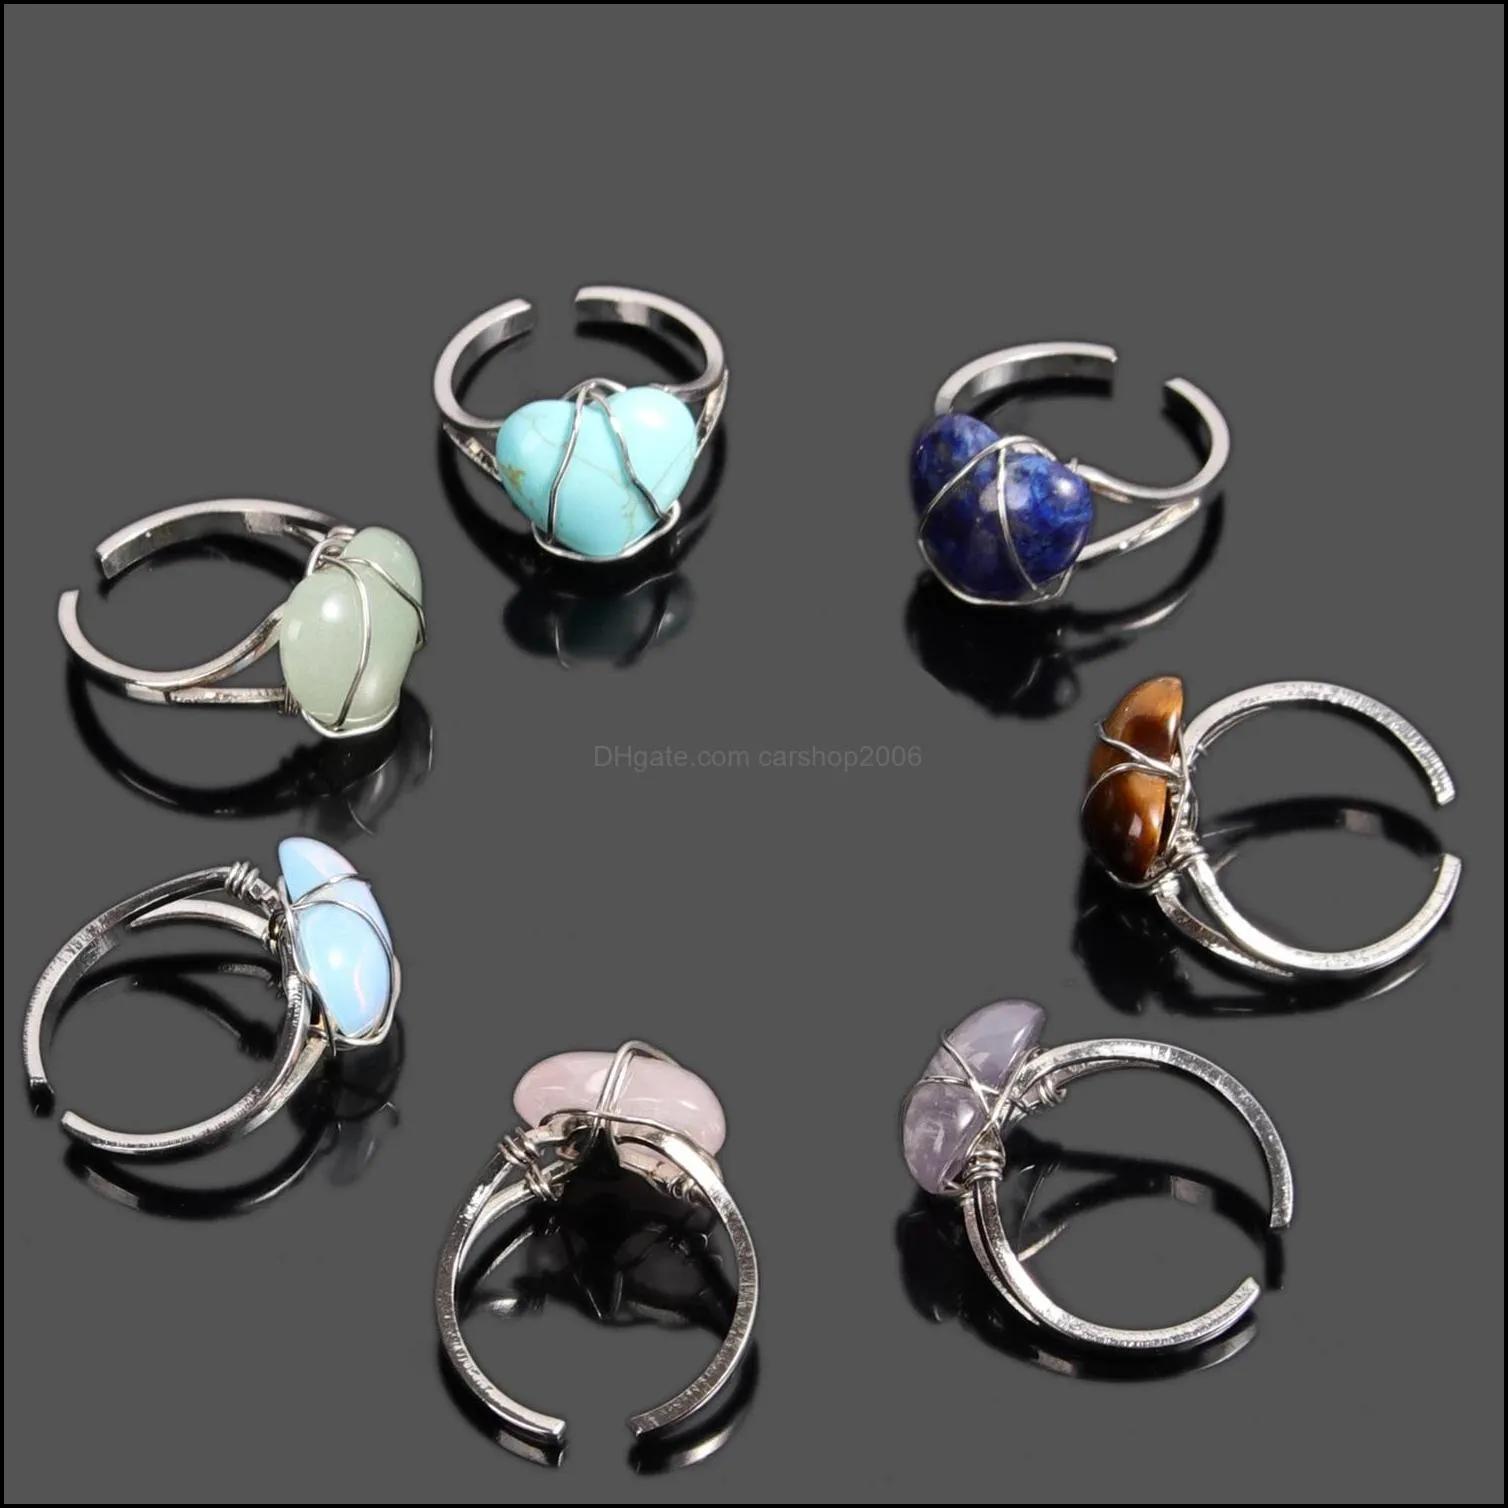 Bandringen sieraden hart natuurlijk kristal open ring sier kleur draad wrap verstelbare kwarts opaal steen genezing mode bruiloft feestje deli